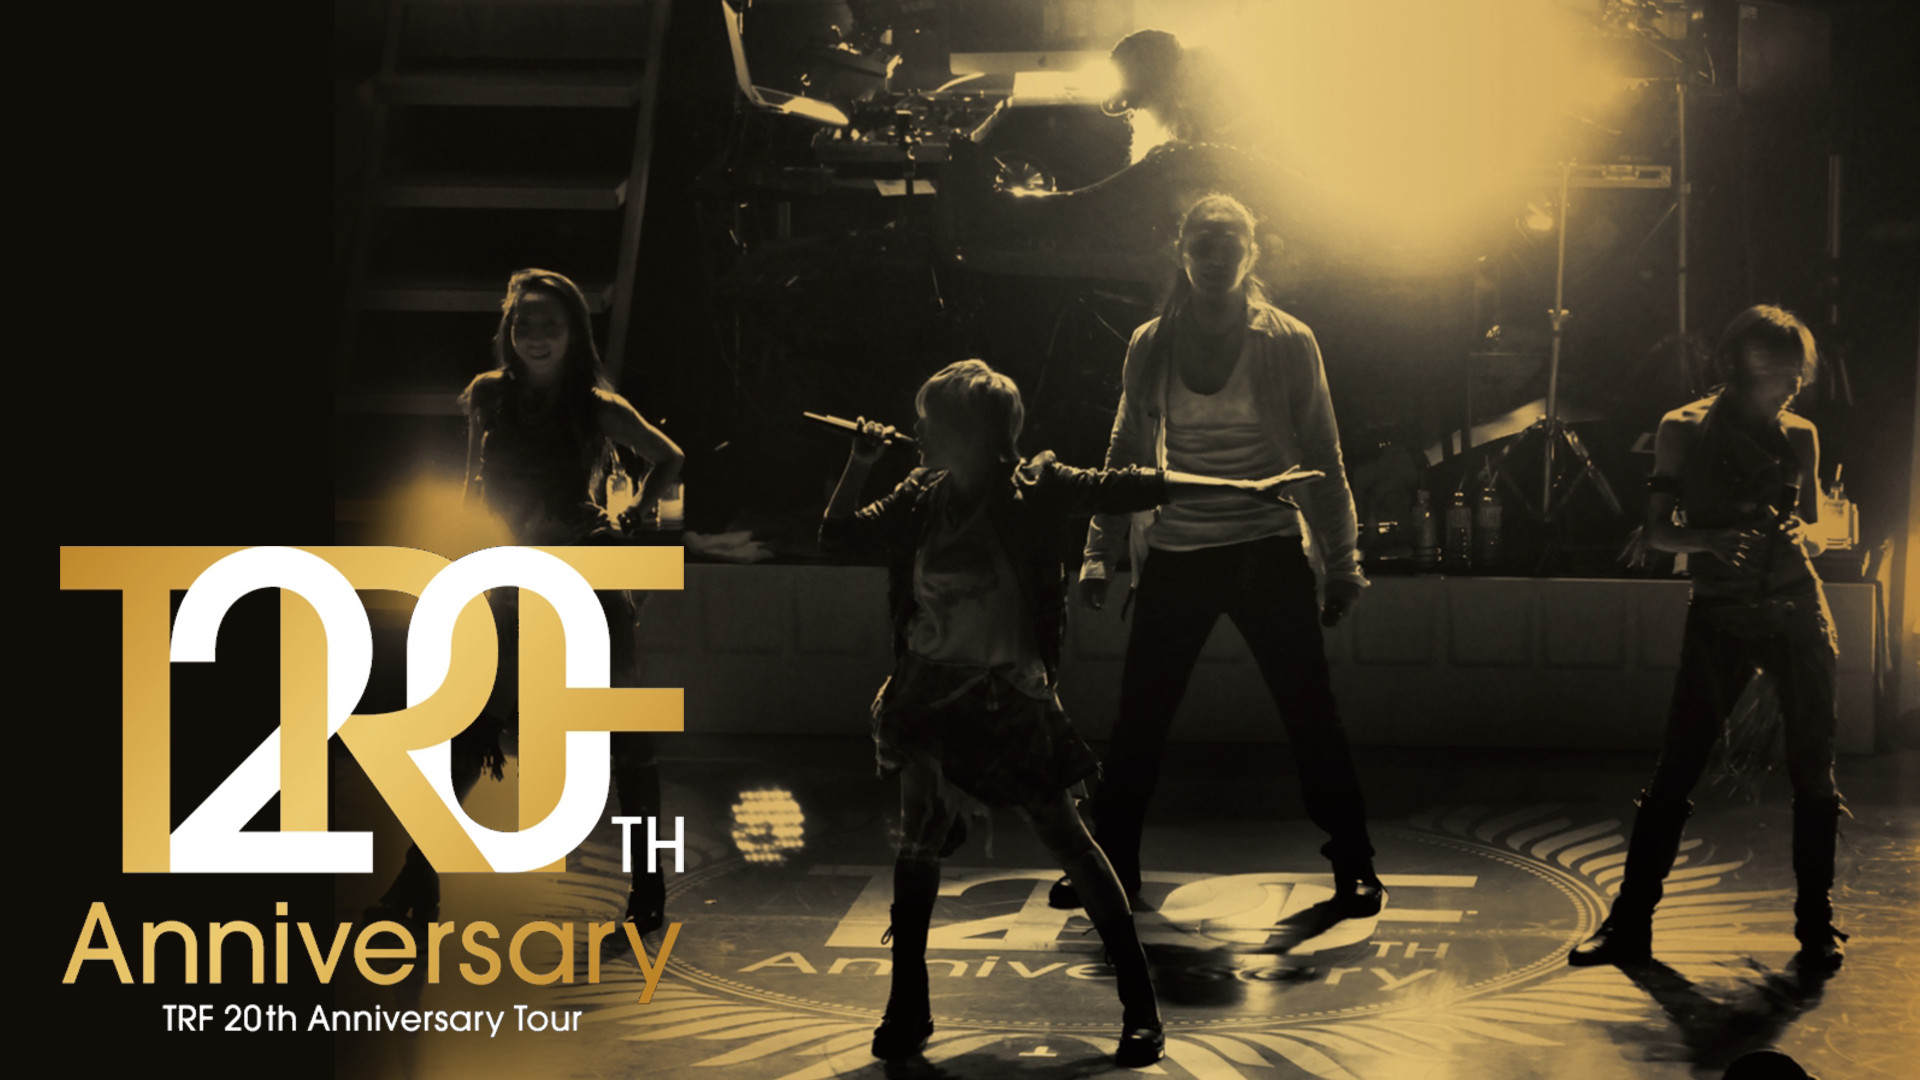 TRF 20th Anniversary Tour(音楽・ライブ / 2013) - 動画配信 | U-NEXT 31日間無料トライアル